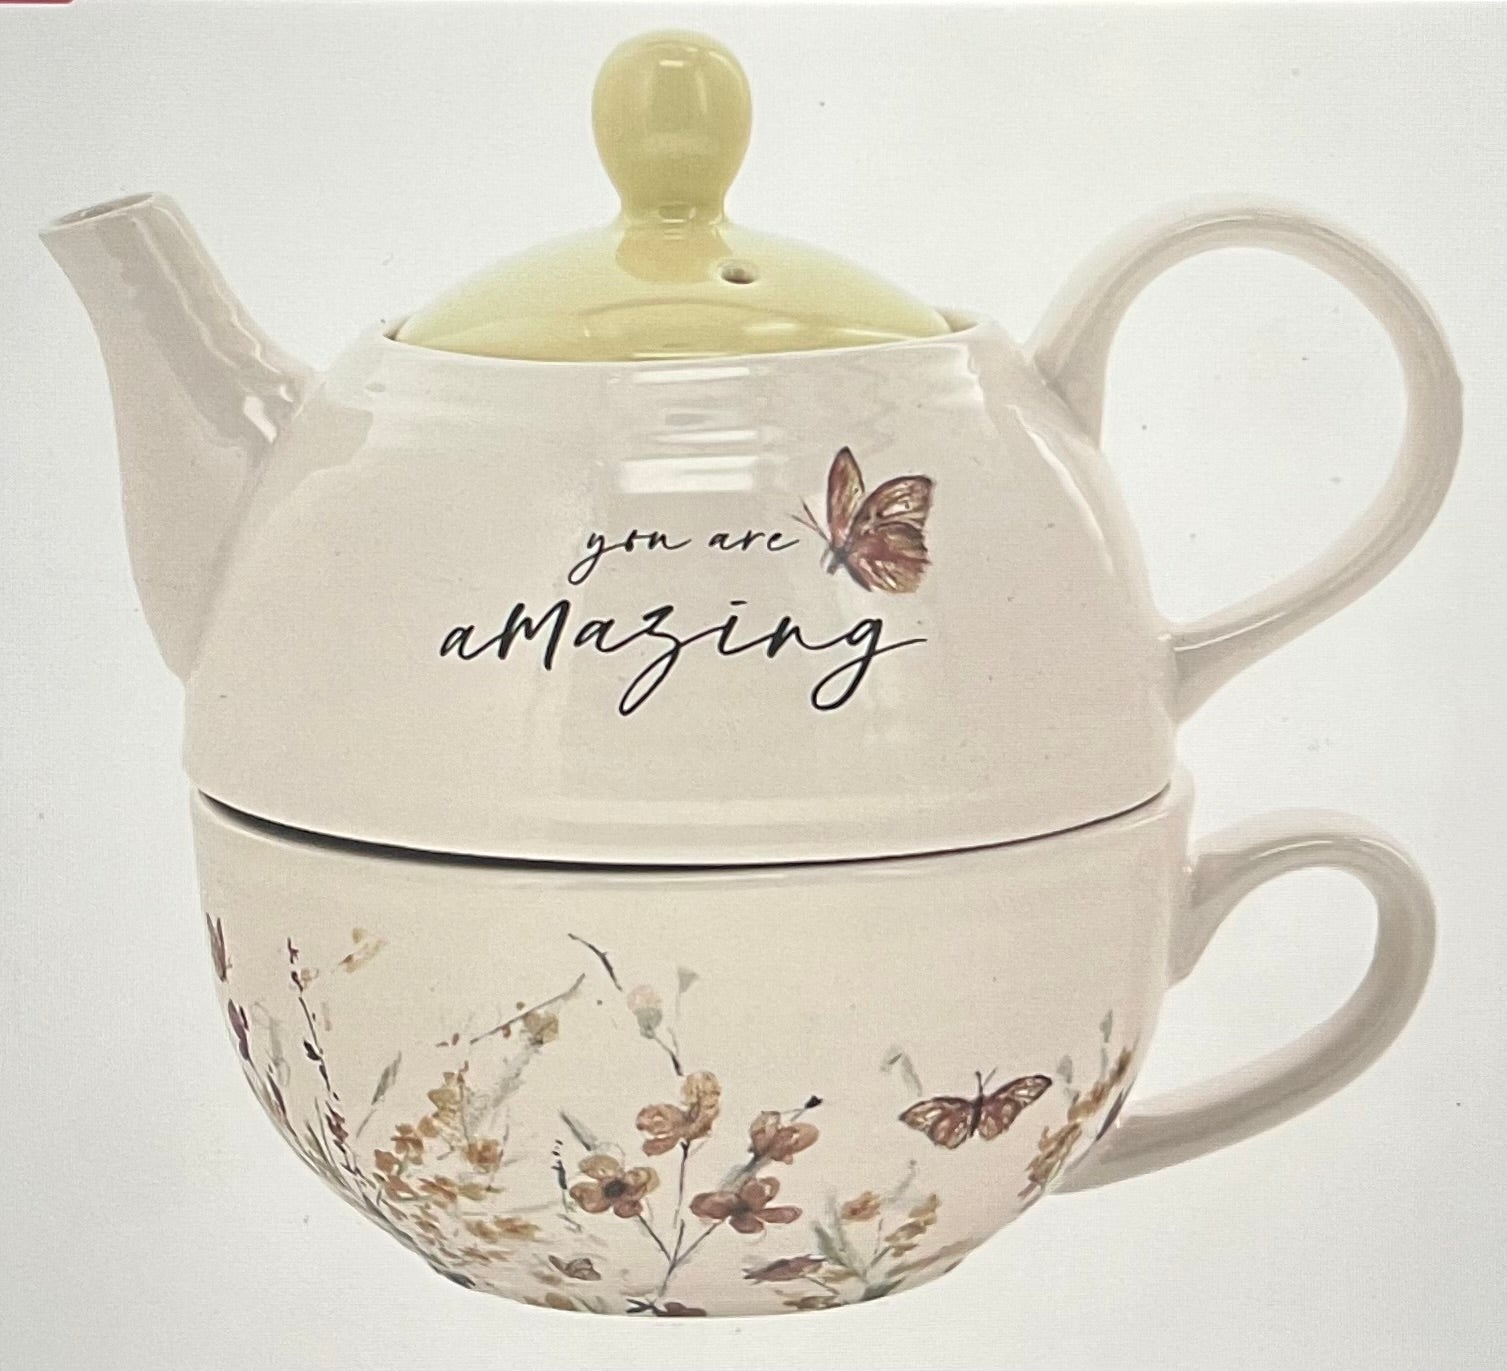 Amazing - Tea for One (14.5 oz Teapot & 10 oz Cup)